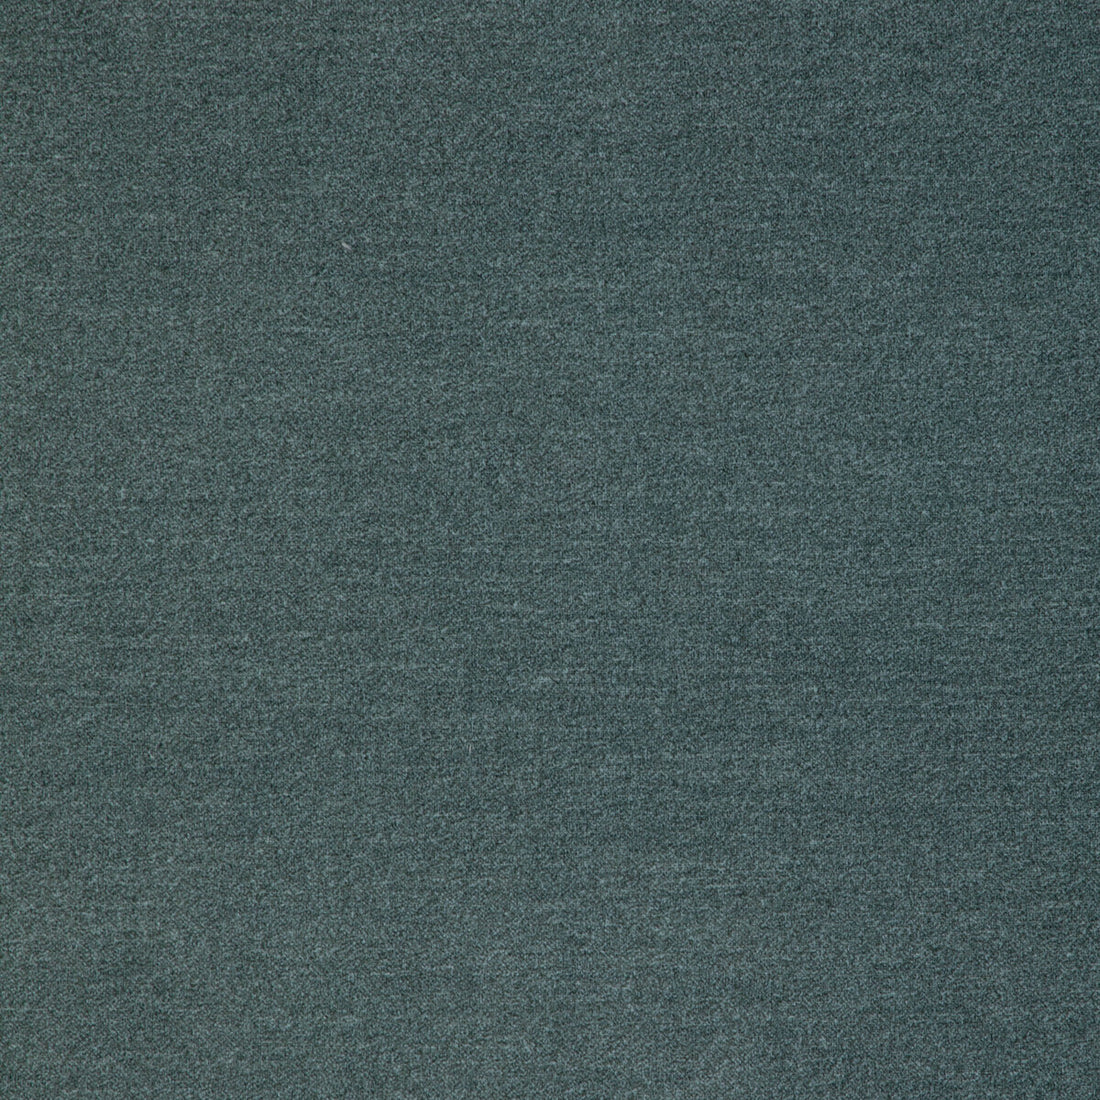 Kravet Smart fabric in 37000-135 color - pattern 37000.135.0 - by Kravet Smart in the Performance Kravetarmor collection